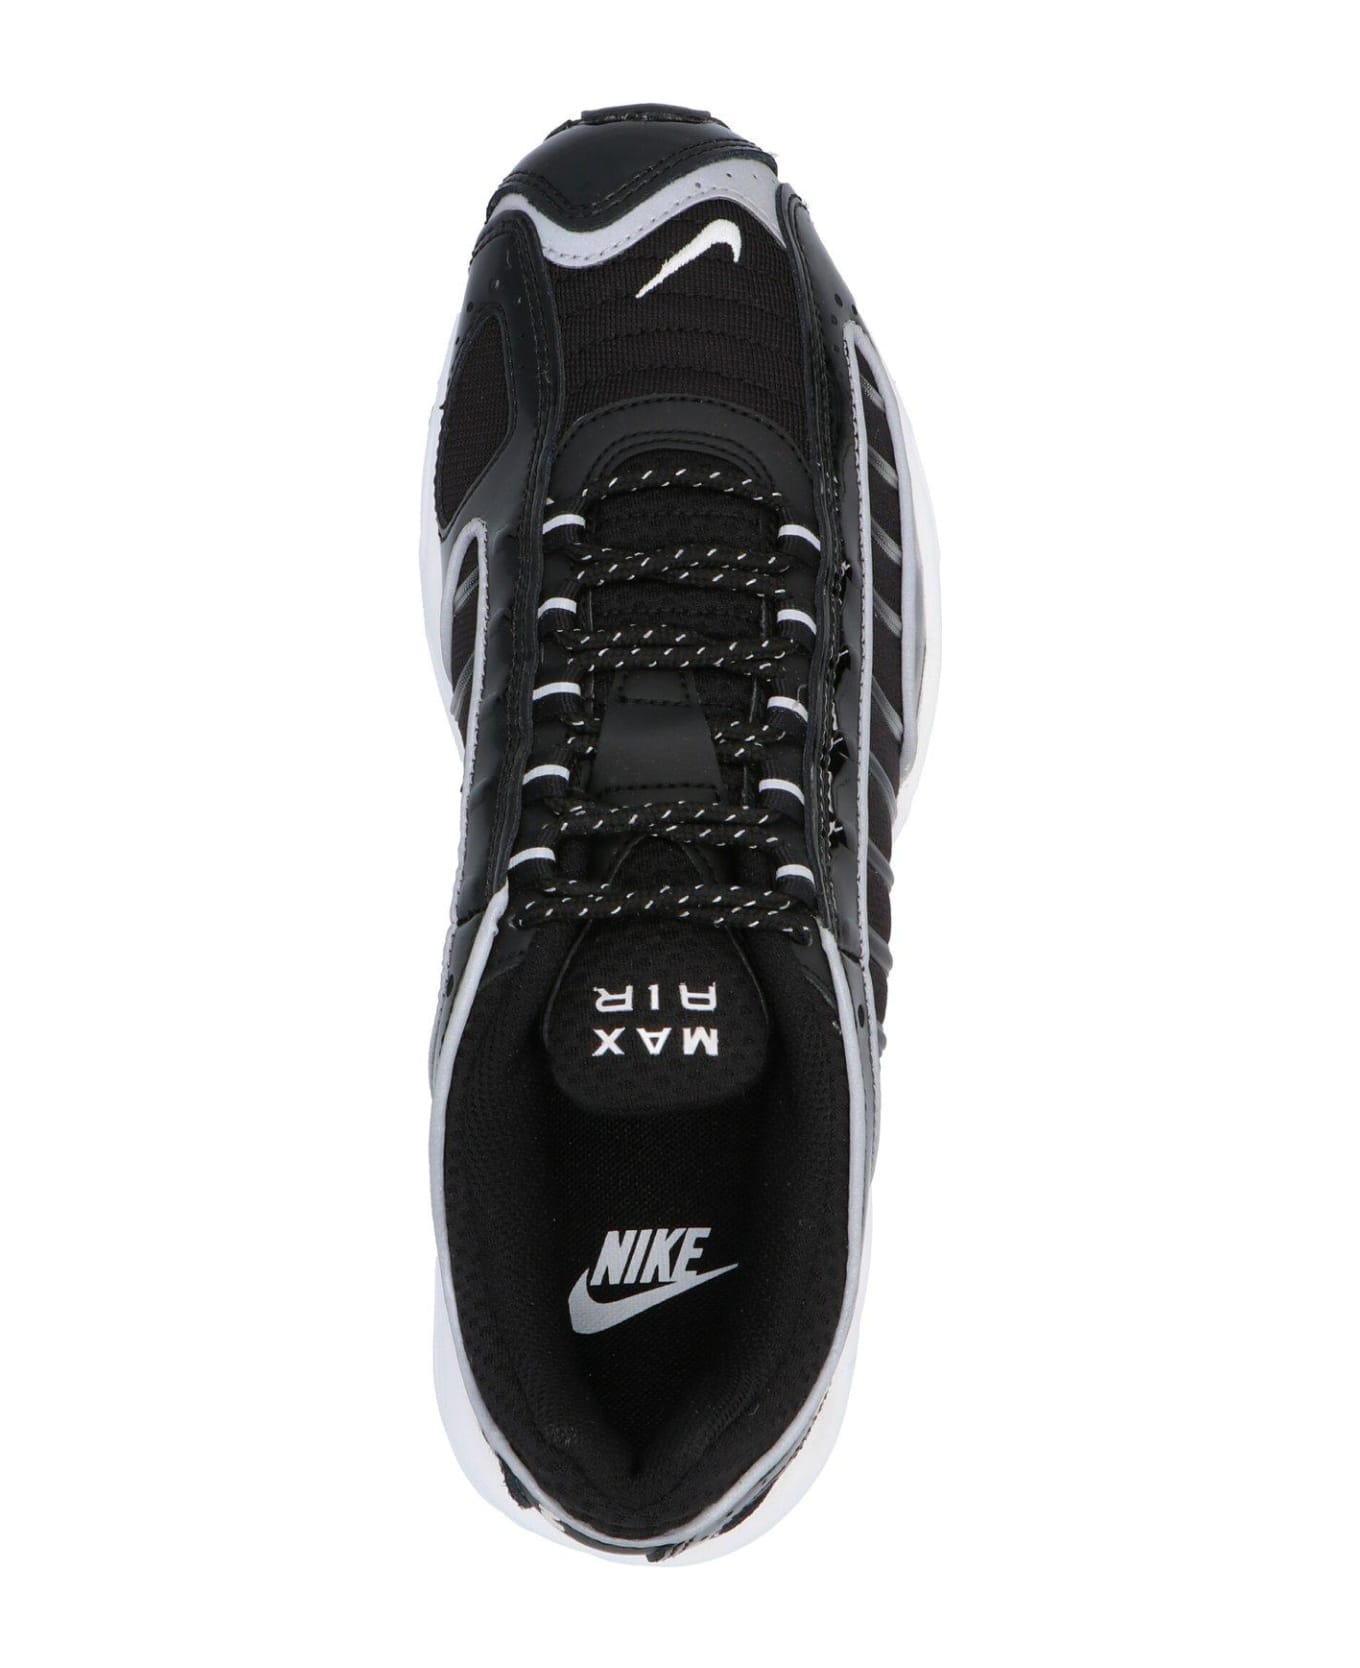 Nike Air Max Tailwind Iv Sneakers - Black